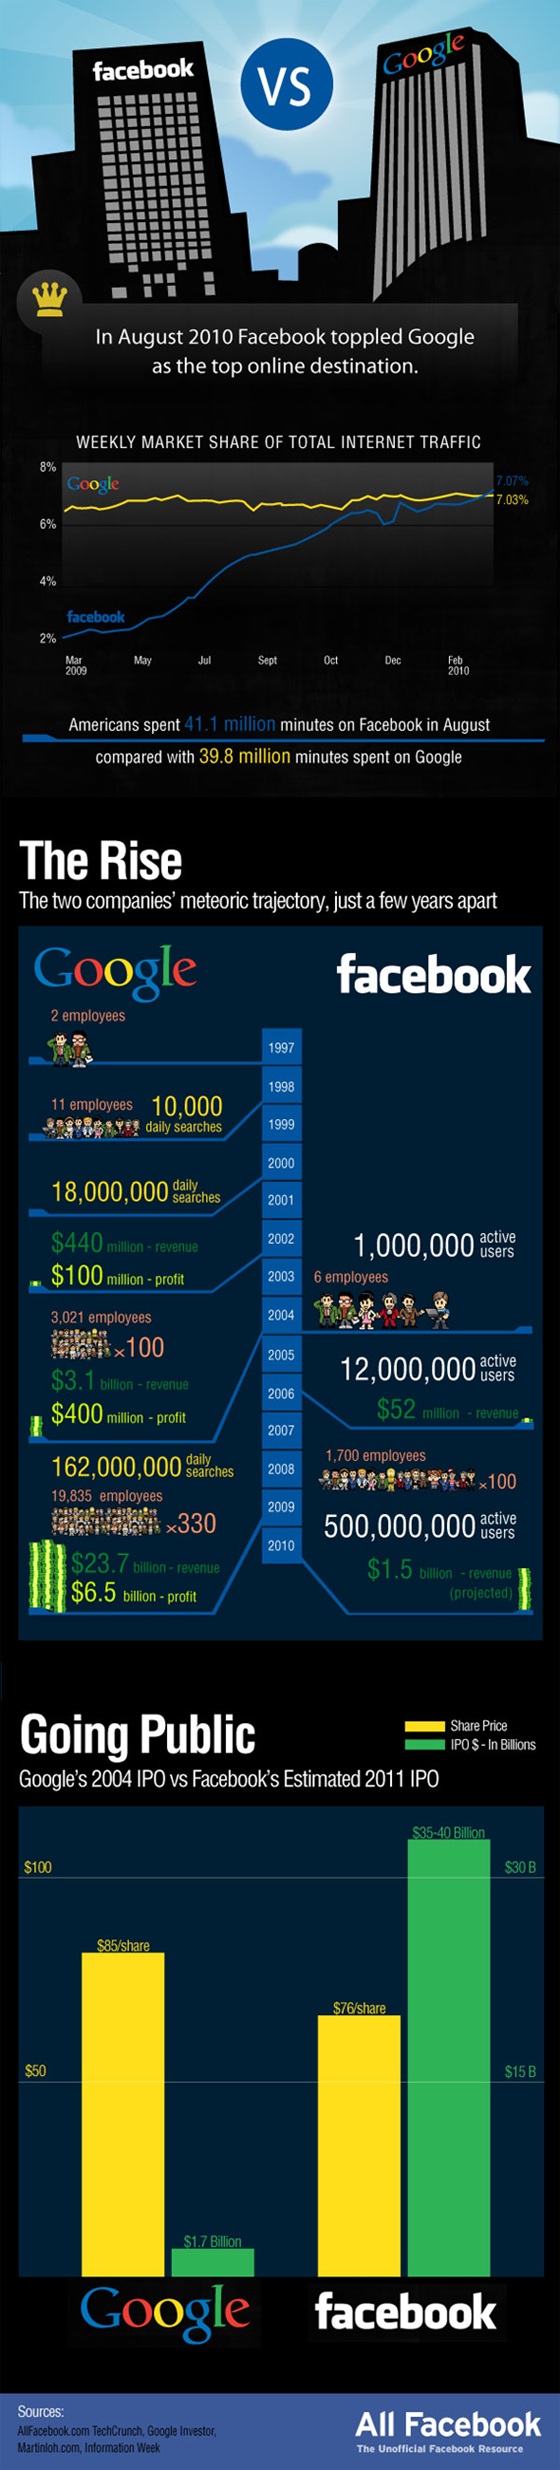 facebook vs google infographic